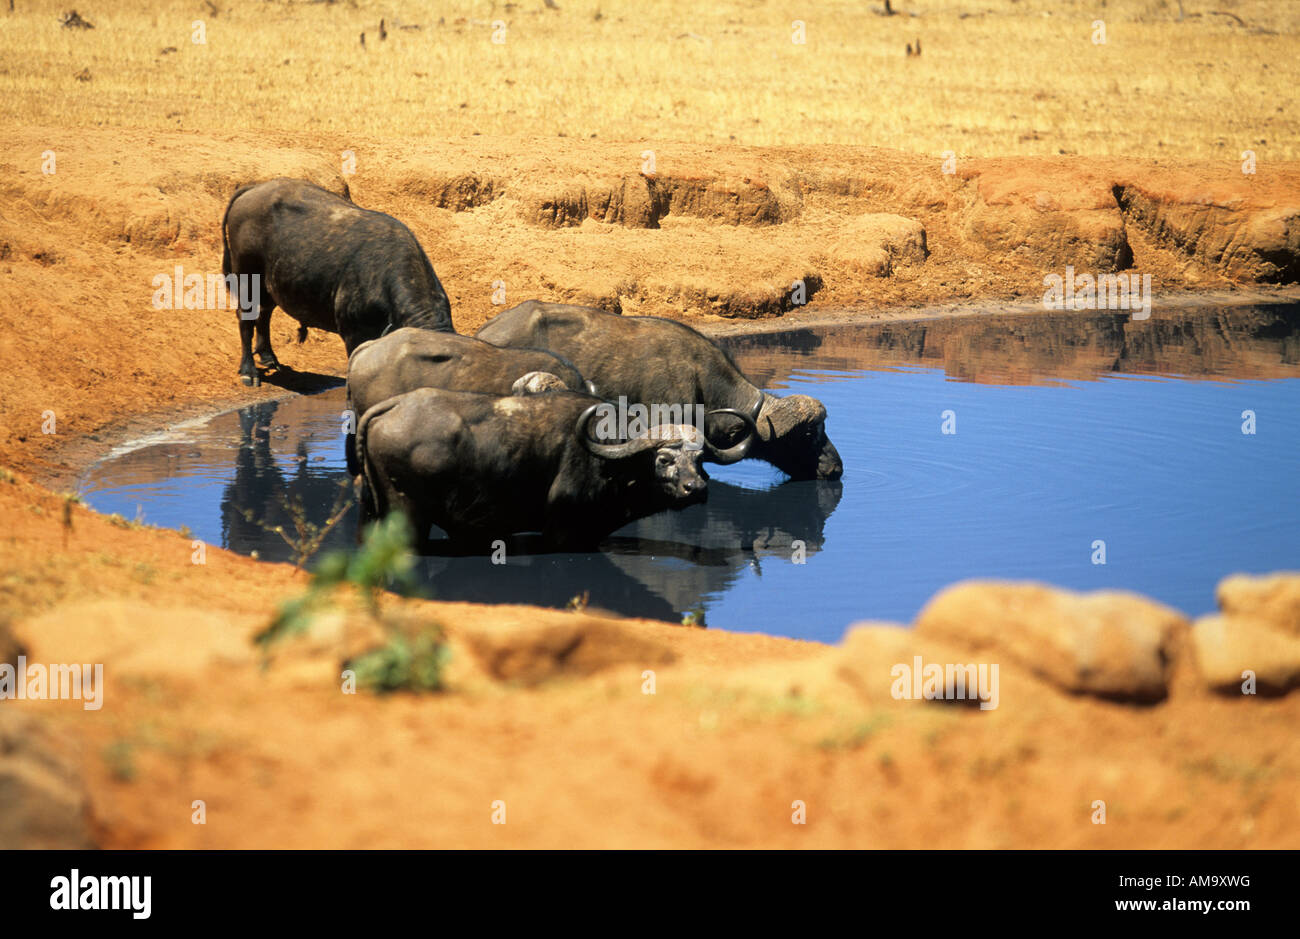 east africa kenya tsavo east game voi buffalo drinking water hole Stock Photo -